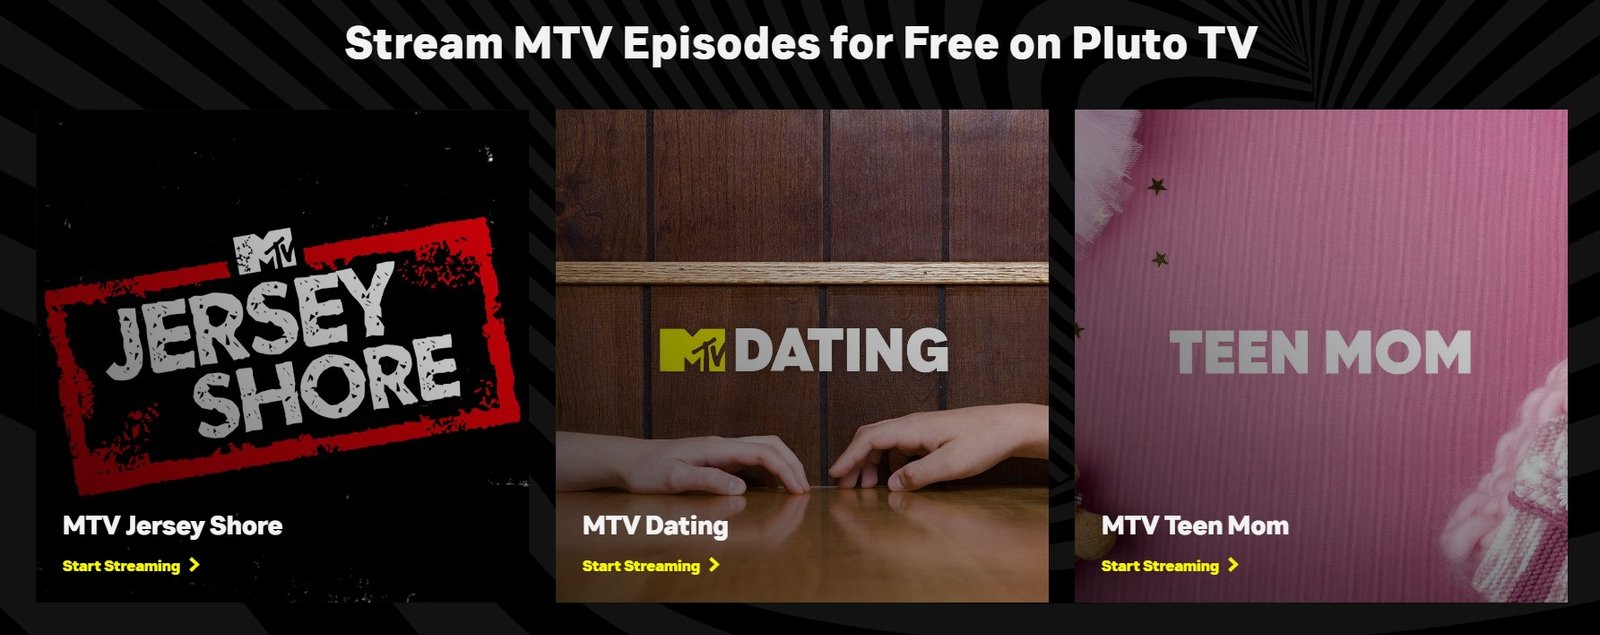 MTV Digital Experience